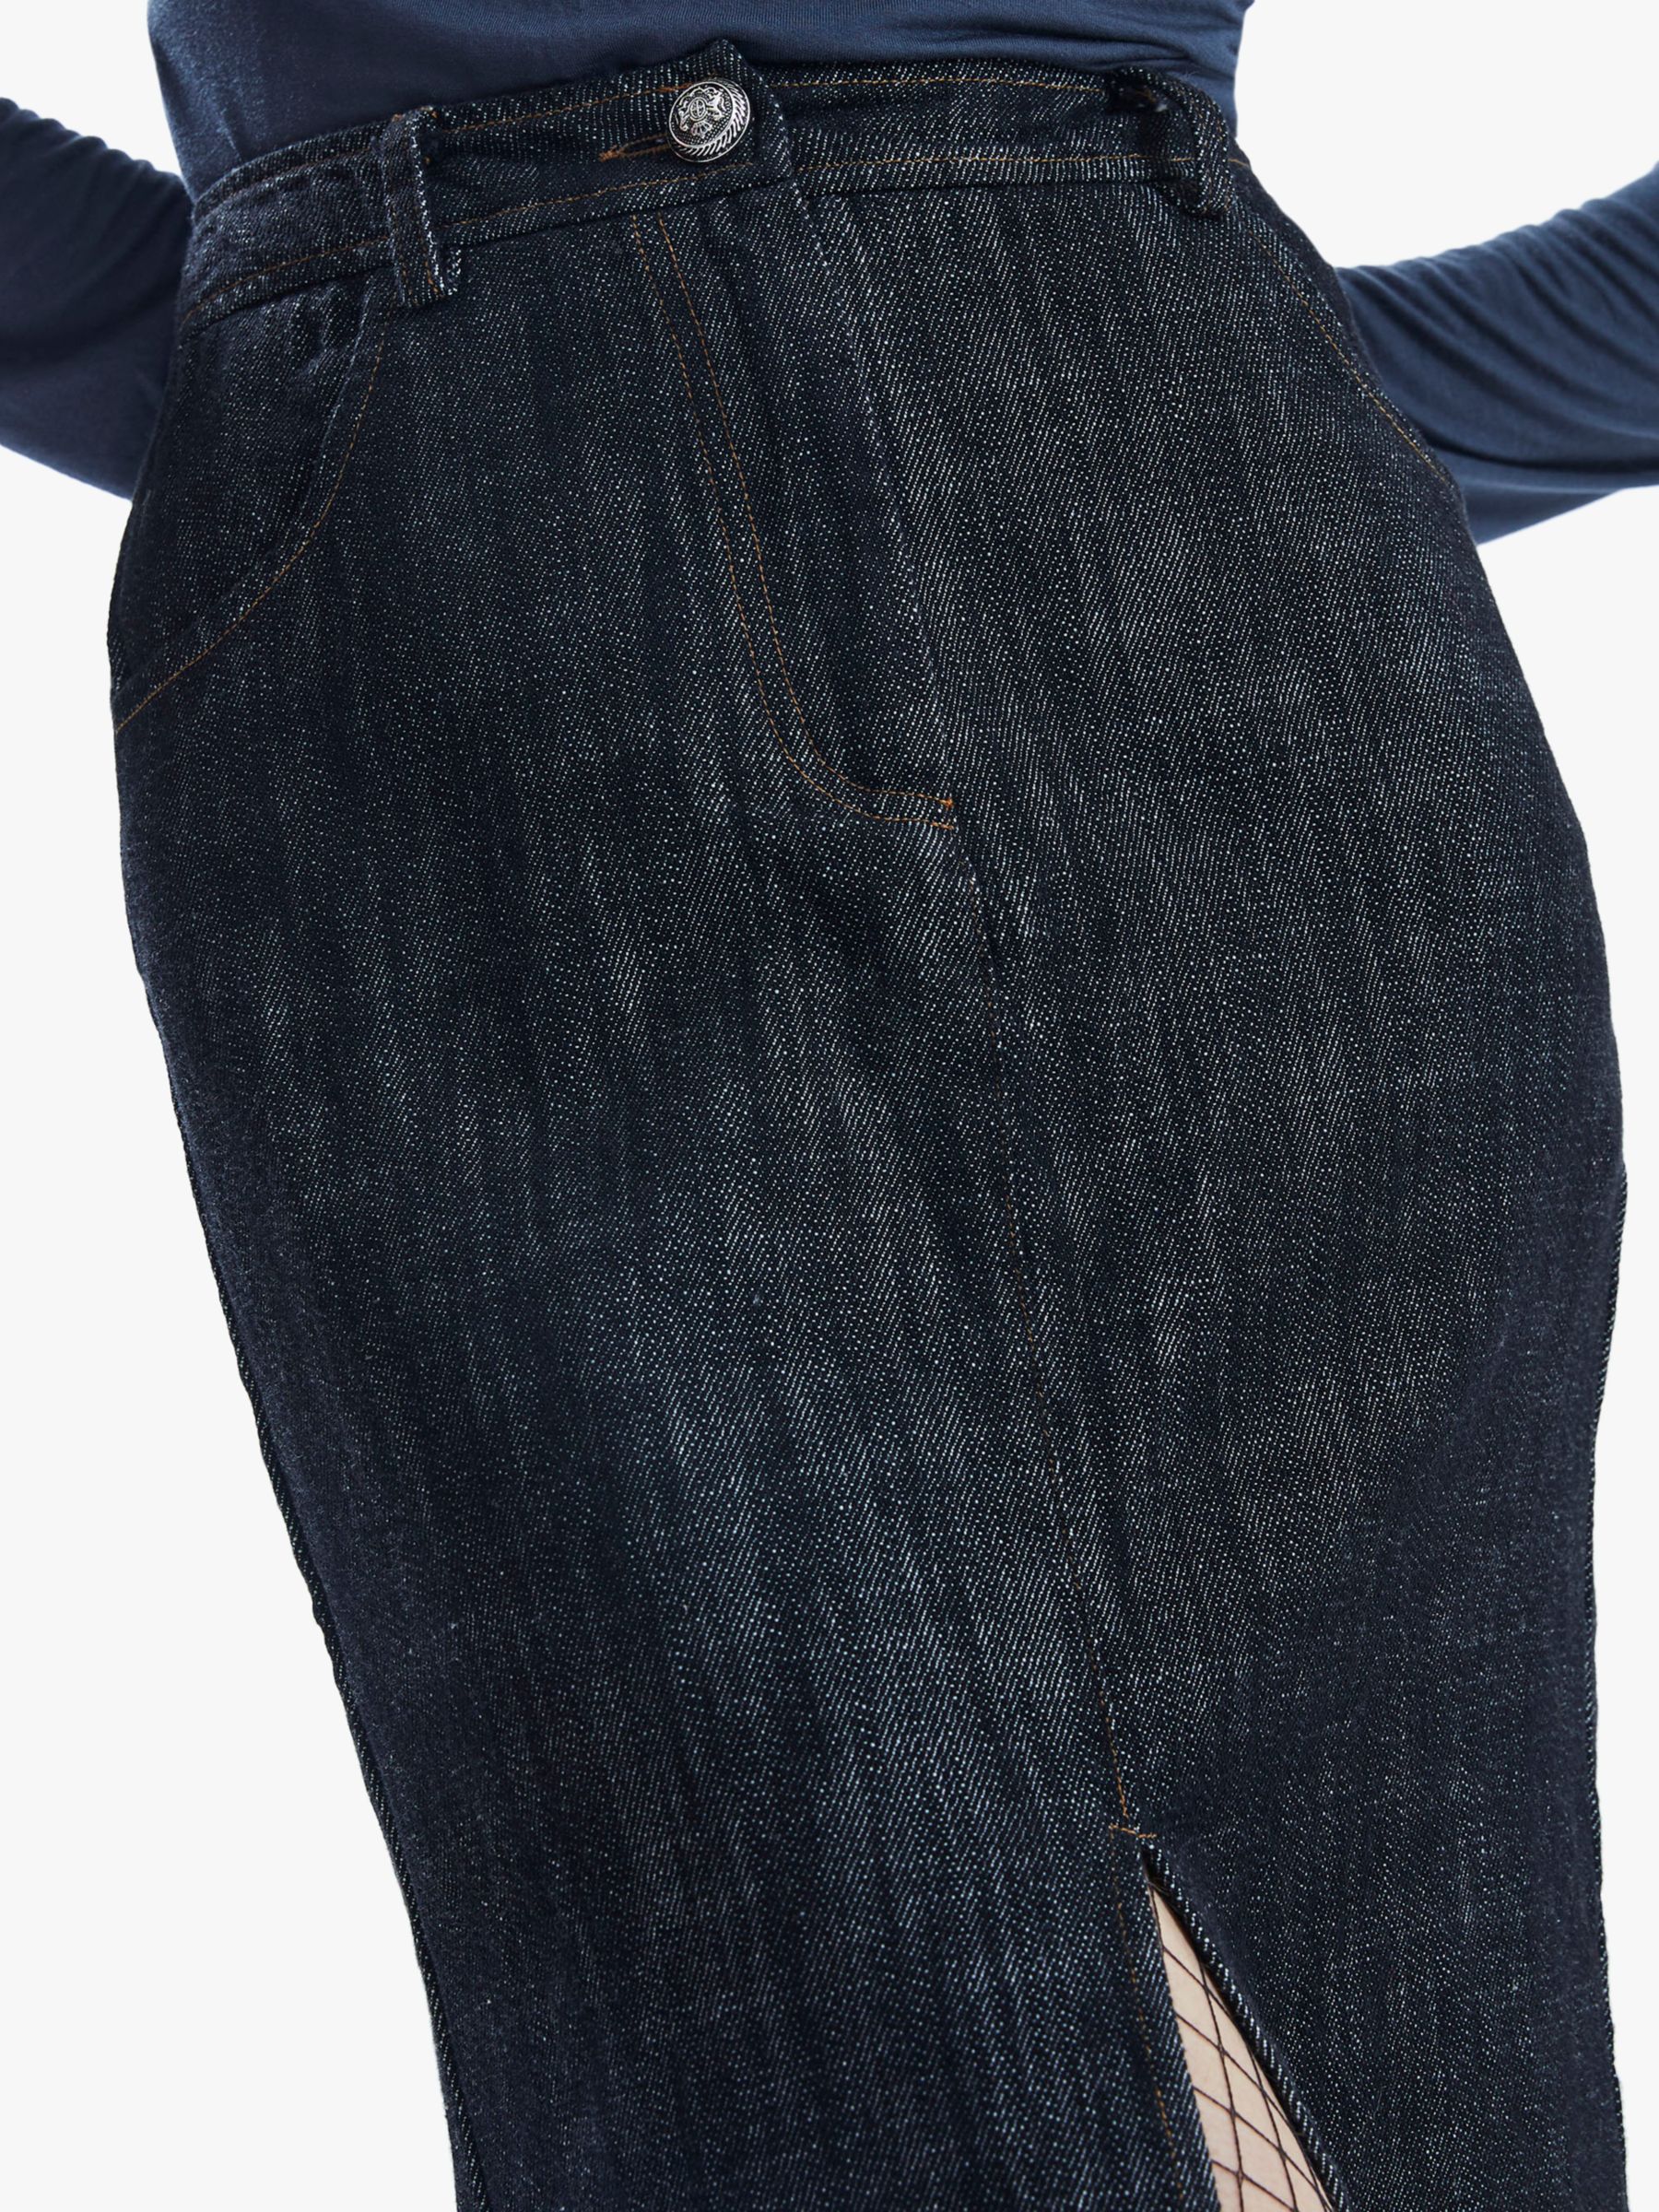 James Lakeland Darck Jean Tailored Skirt, Black, 8